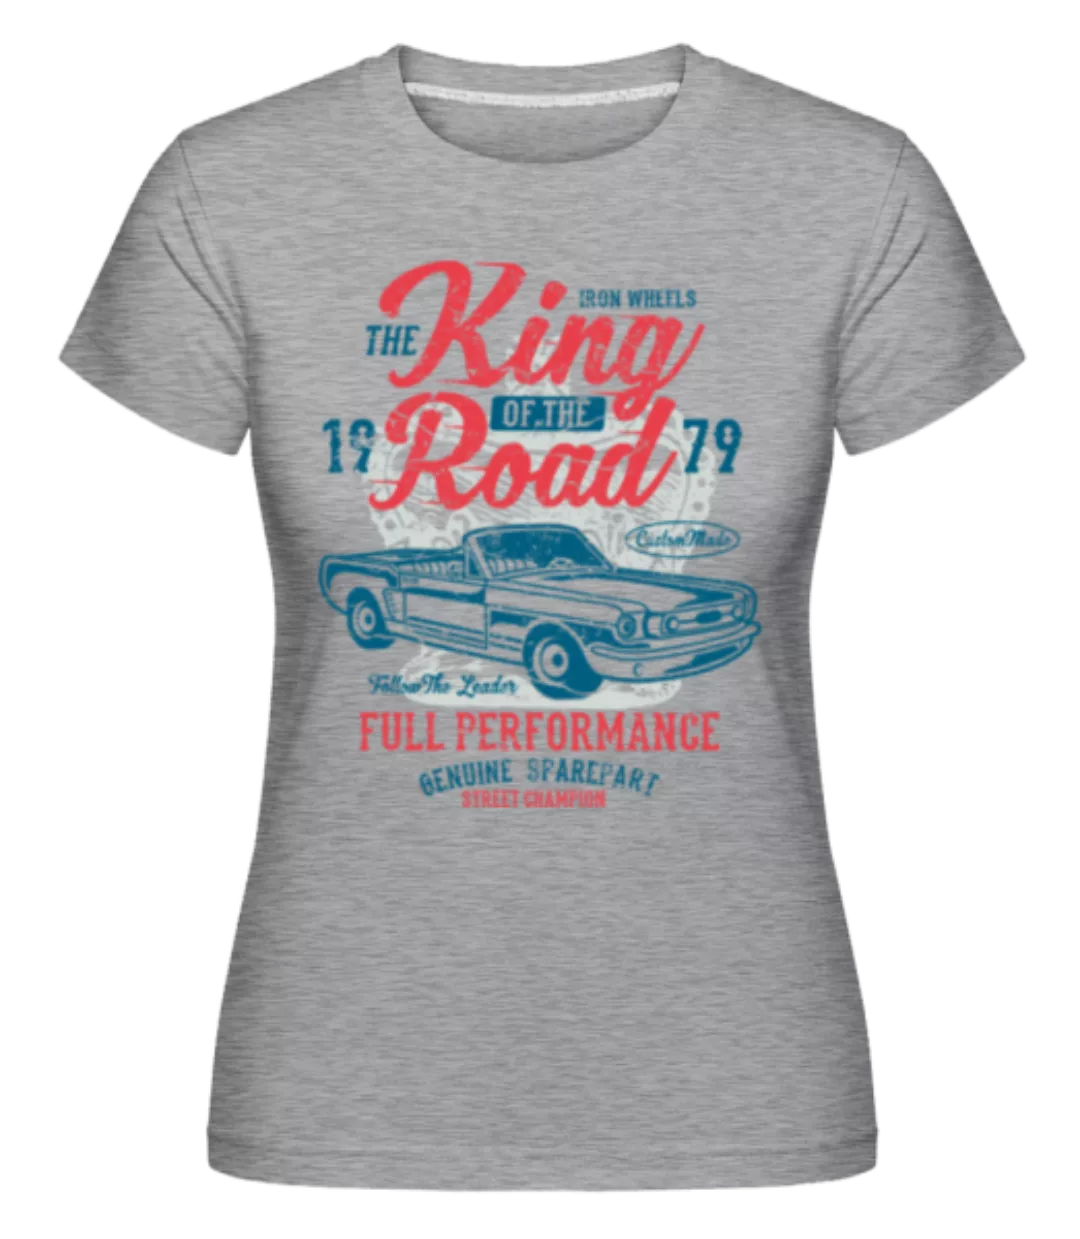 King Of The Road · Shirtinator Frauen T-Shirt günstig online kaufen